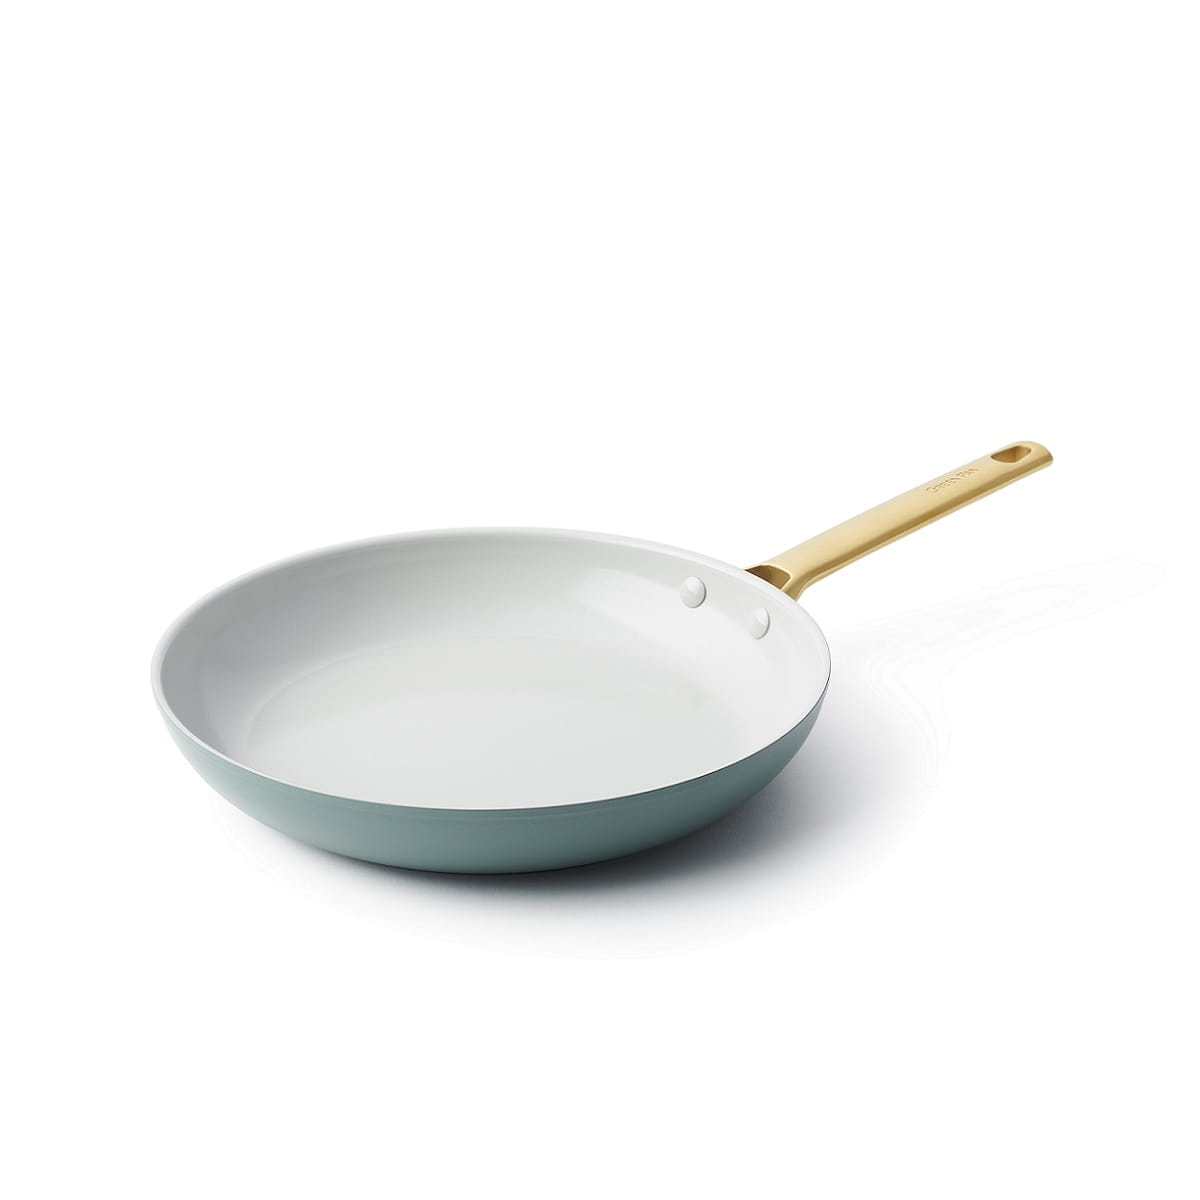 CC003715-001 - Padova Frying Pan, Smokey Sky Blue - 28cm - Product Image 1